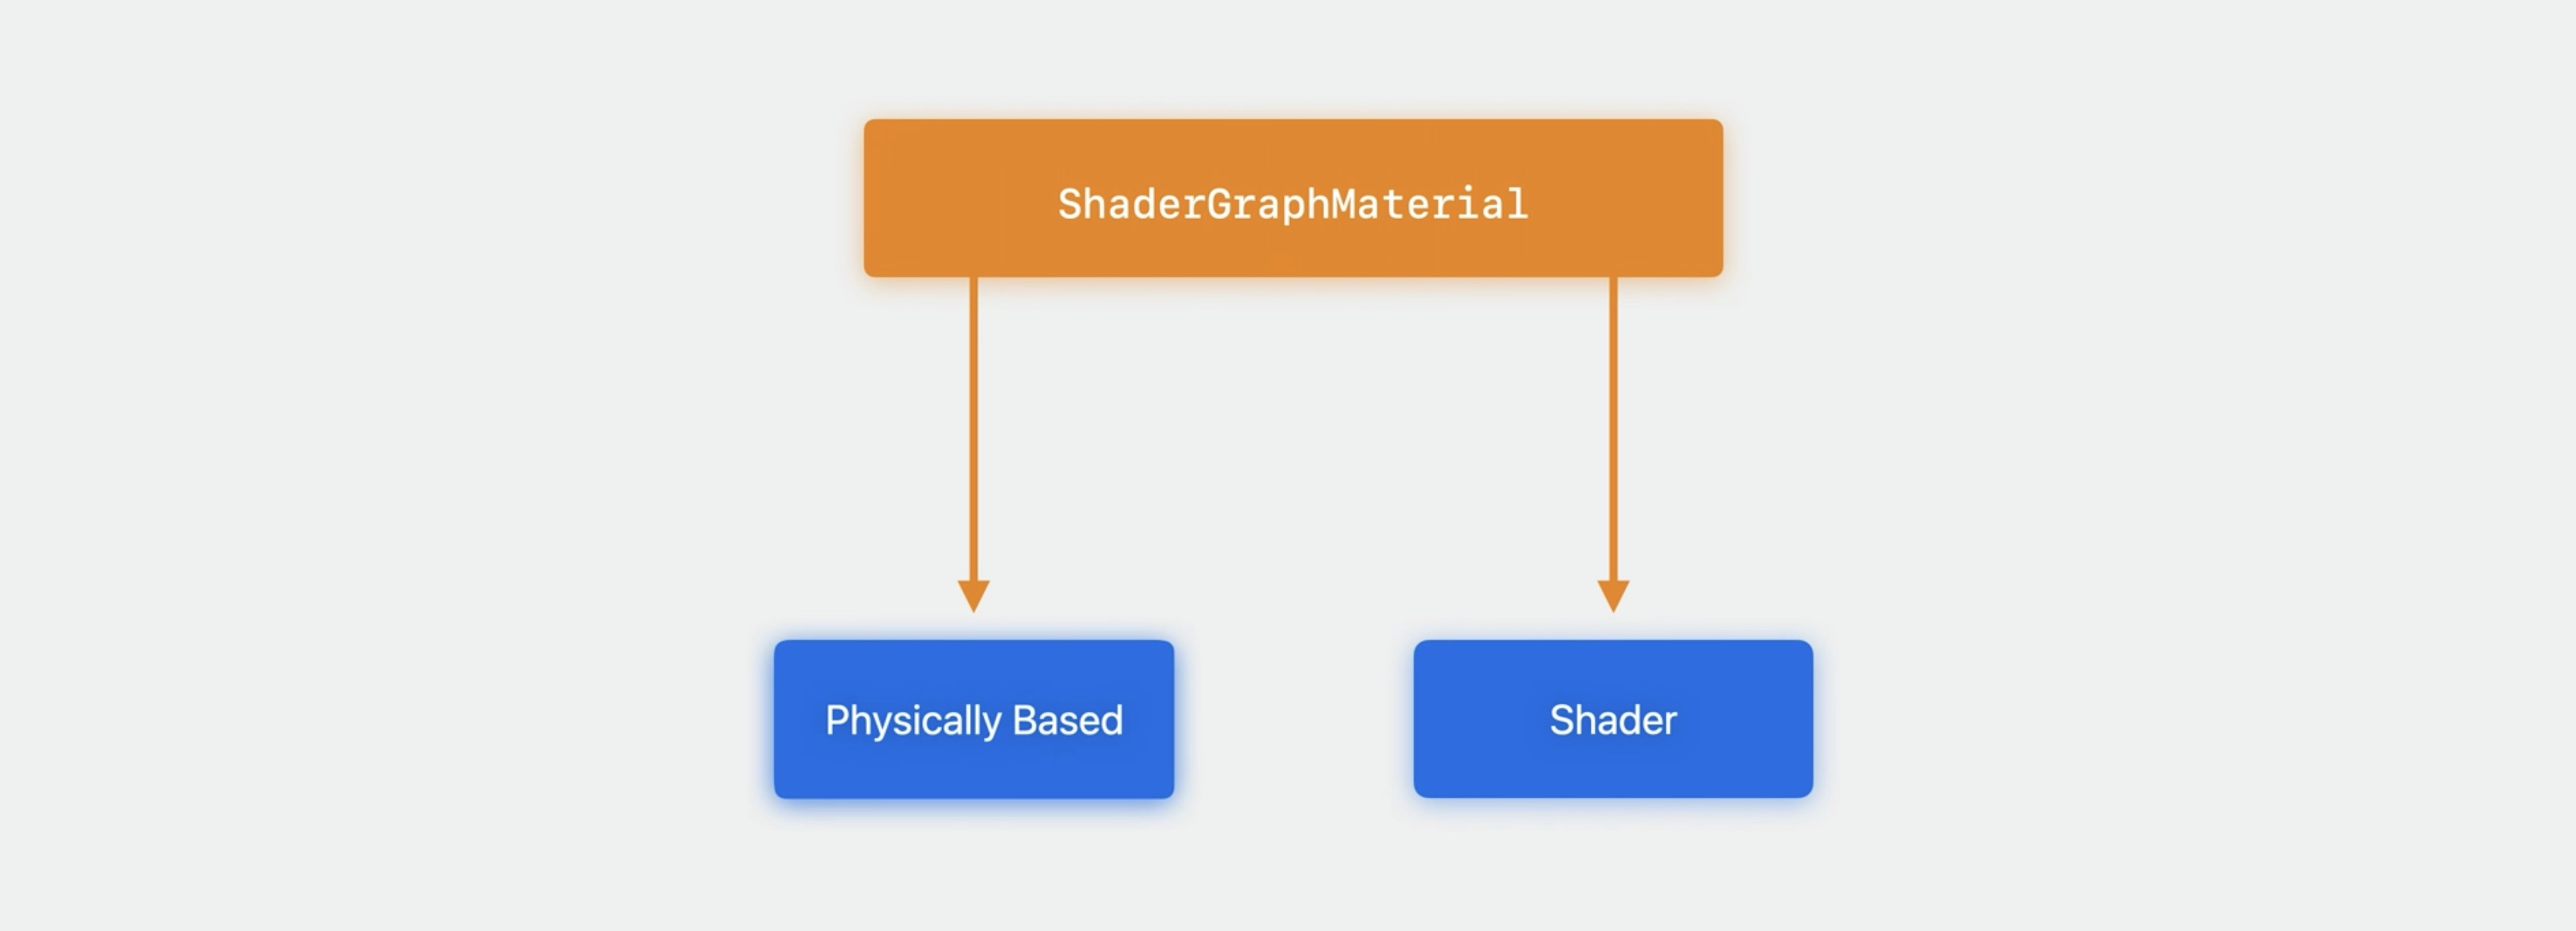 shaderGraphMaterial